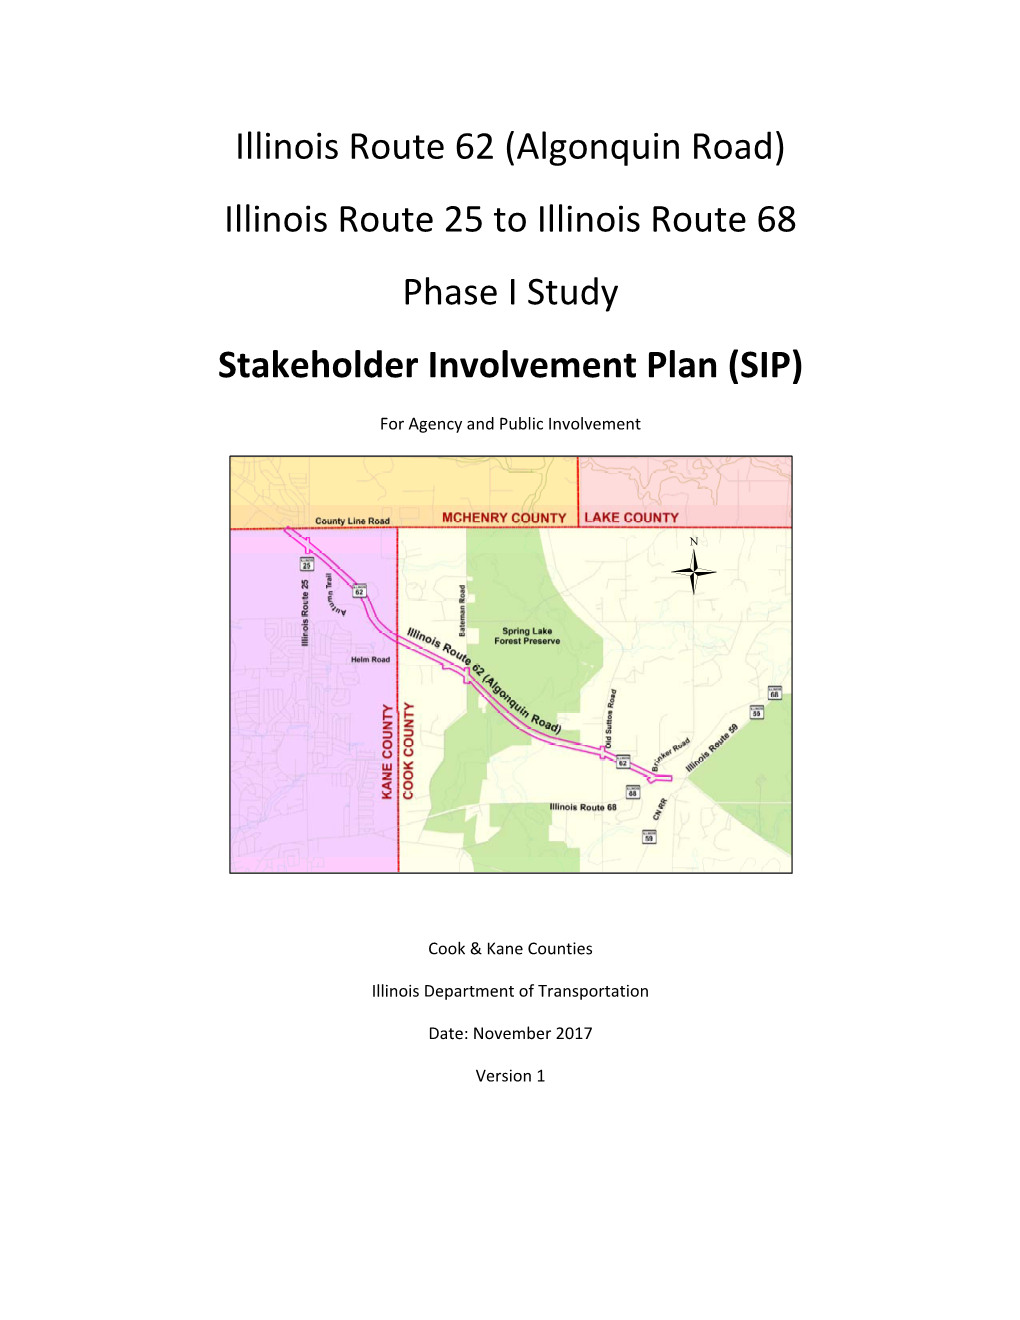 Illinois Route 62 (Algonquin Road) Illinois Route 25 to Illinois Route 68 Phase I Study Stakeholder Involvement Plan (SIP)